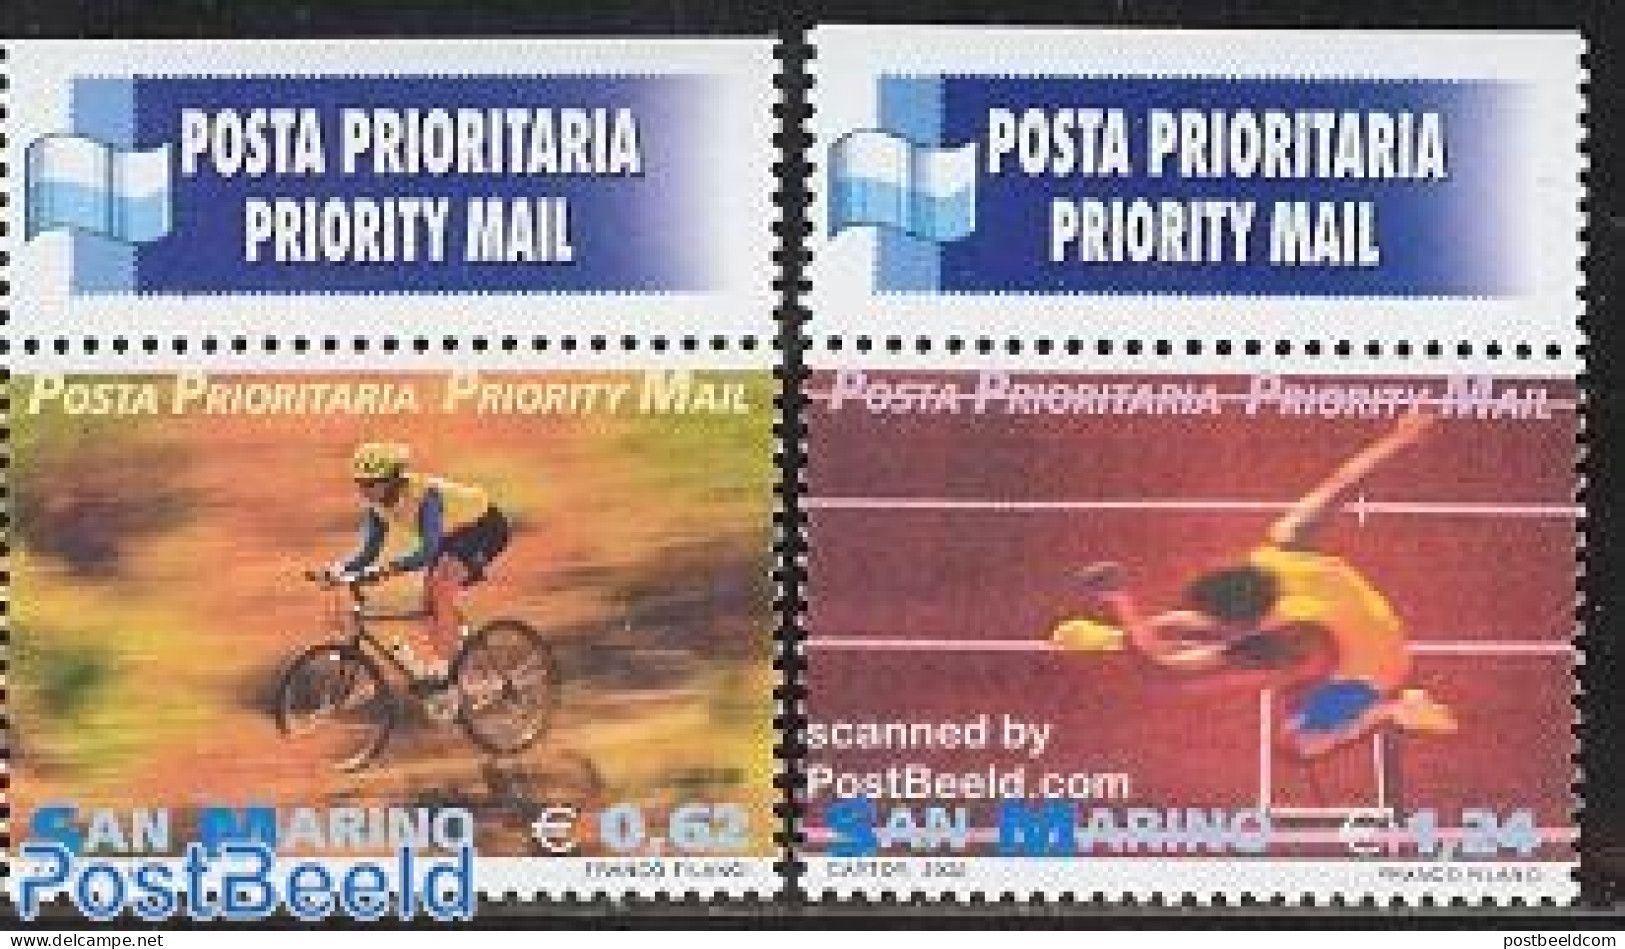 San Marino 2002 Sports, Priority 2v+priority Tab, Mint NH, Sport - Athletics - Cycling - Nuovi